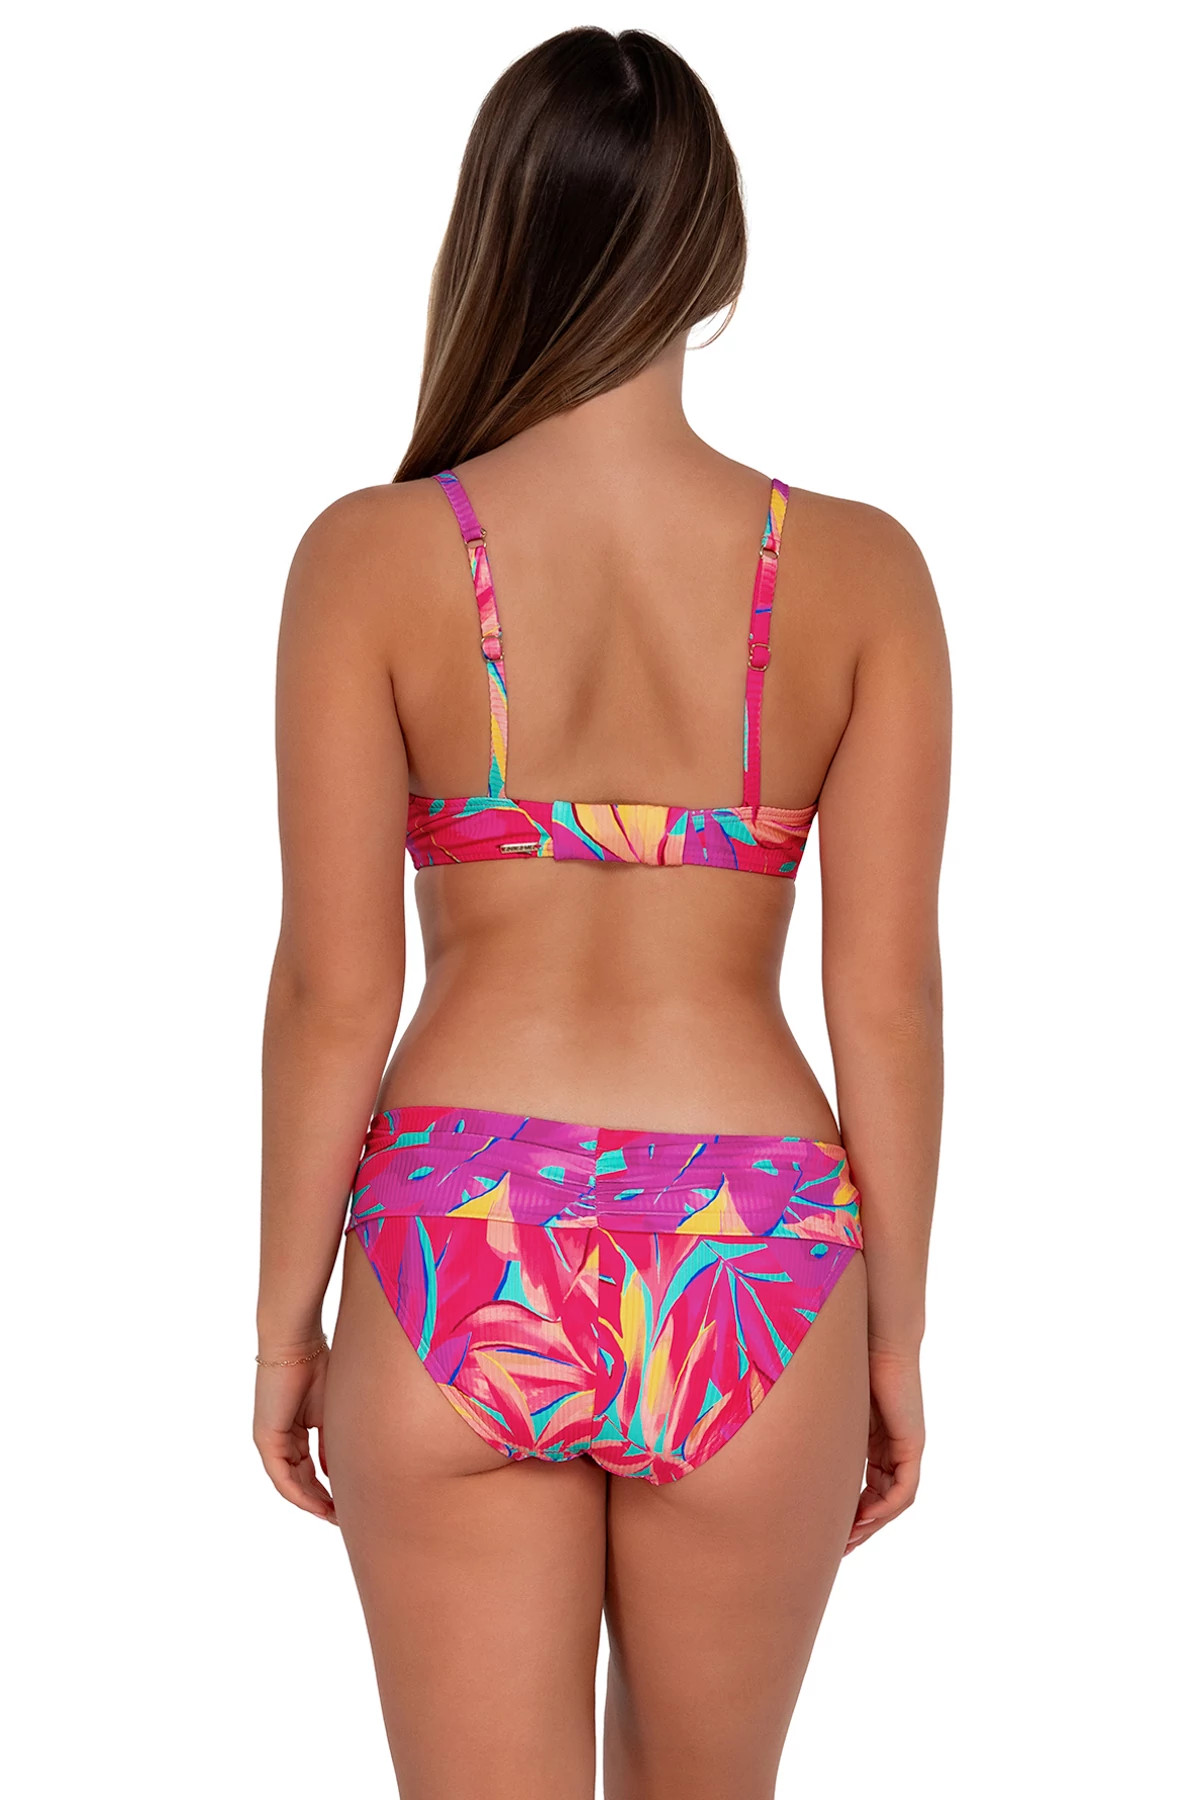 OASIS SANDBAR RIB Kauai Keyhole Underwire Bikini Top (E-H Cup) image number 3